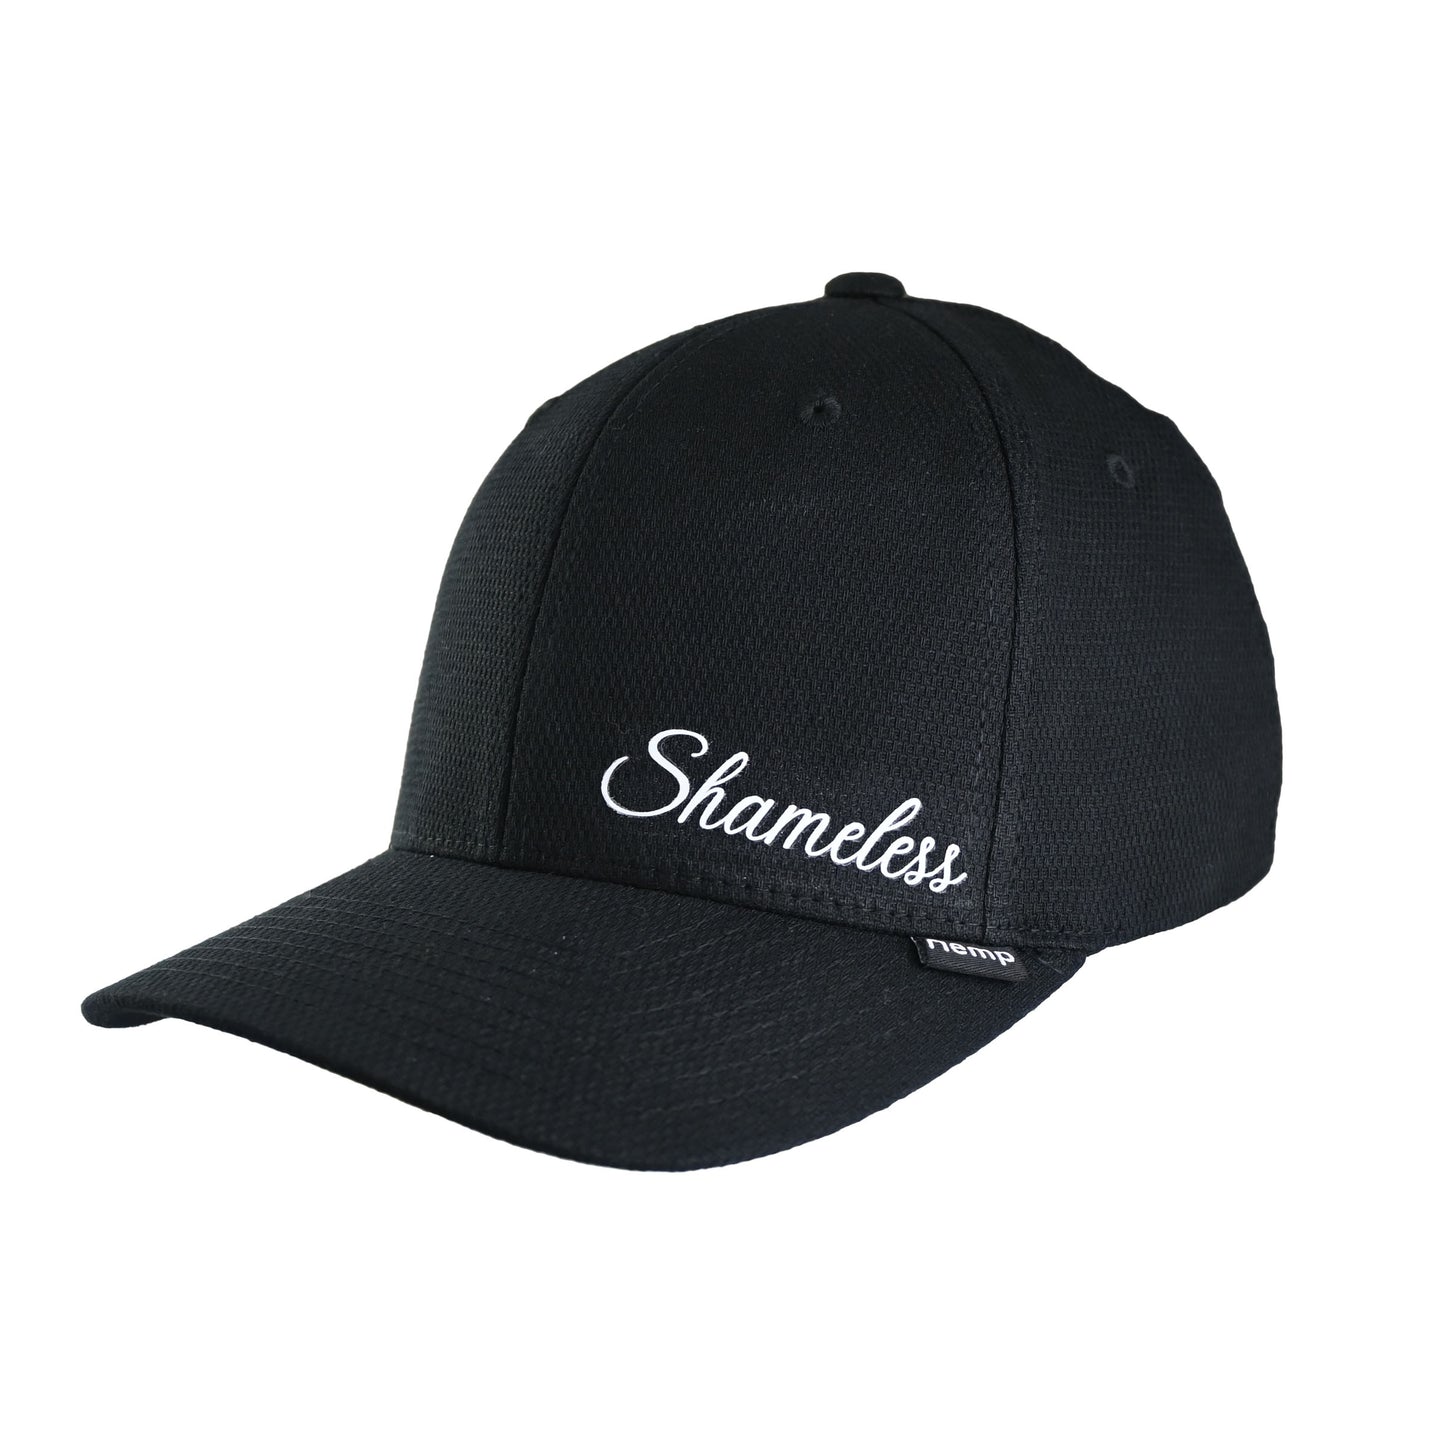 Shameless Future Blend 2.1 Hat